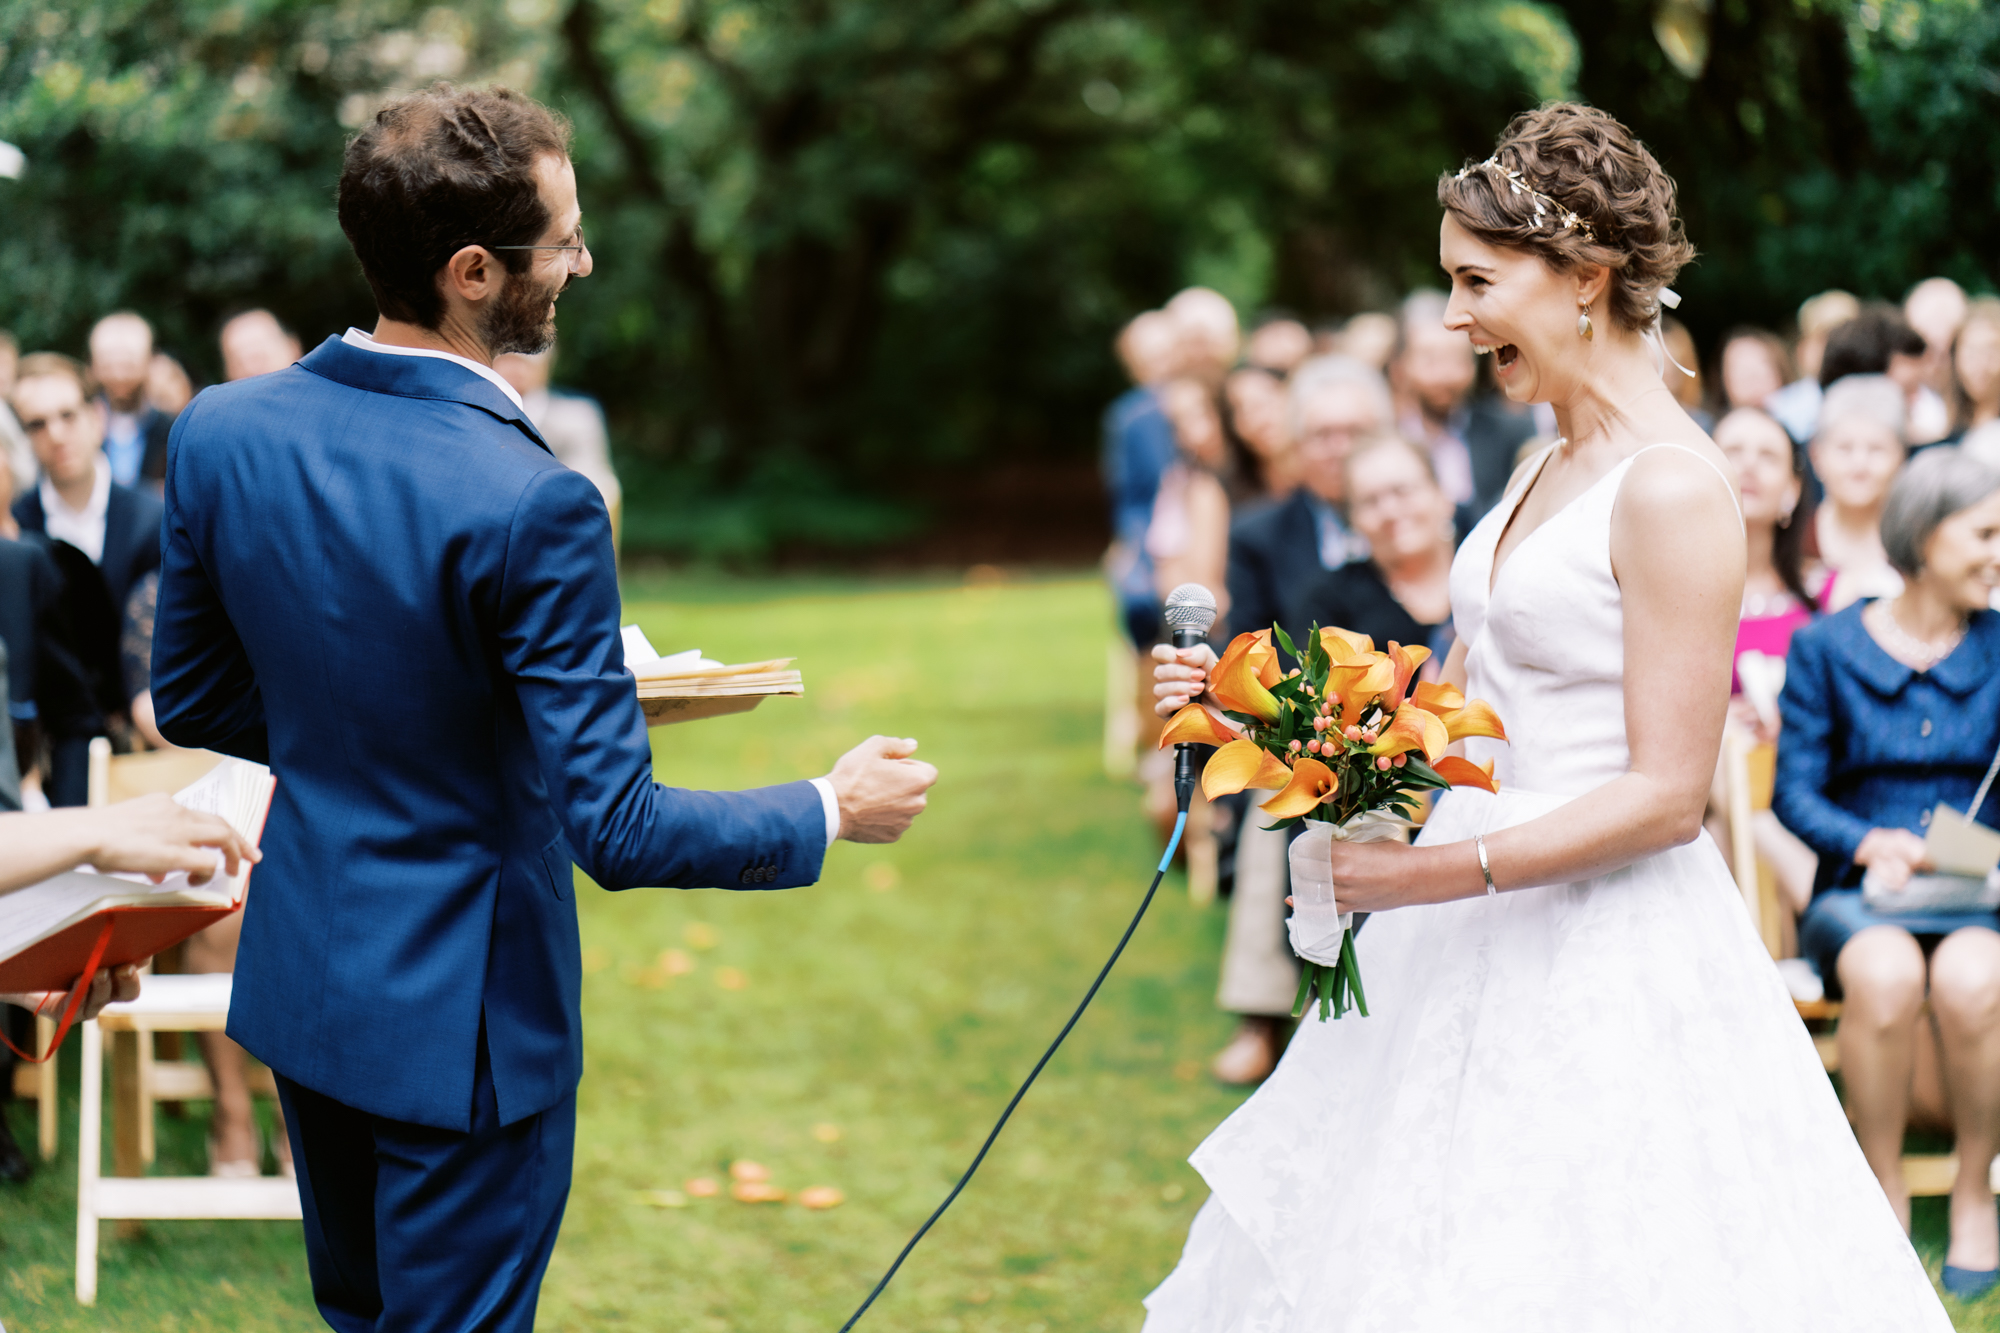 Dunn Garden Weddings: Amy and Scott's wedding ceremony